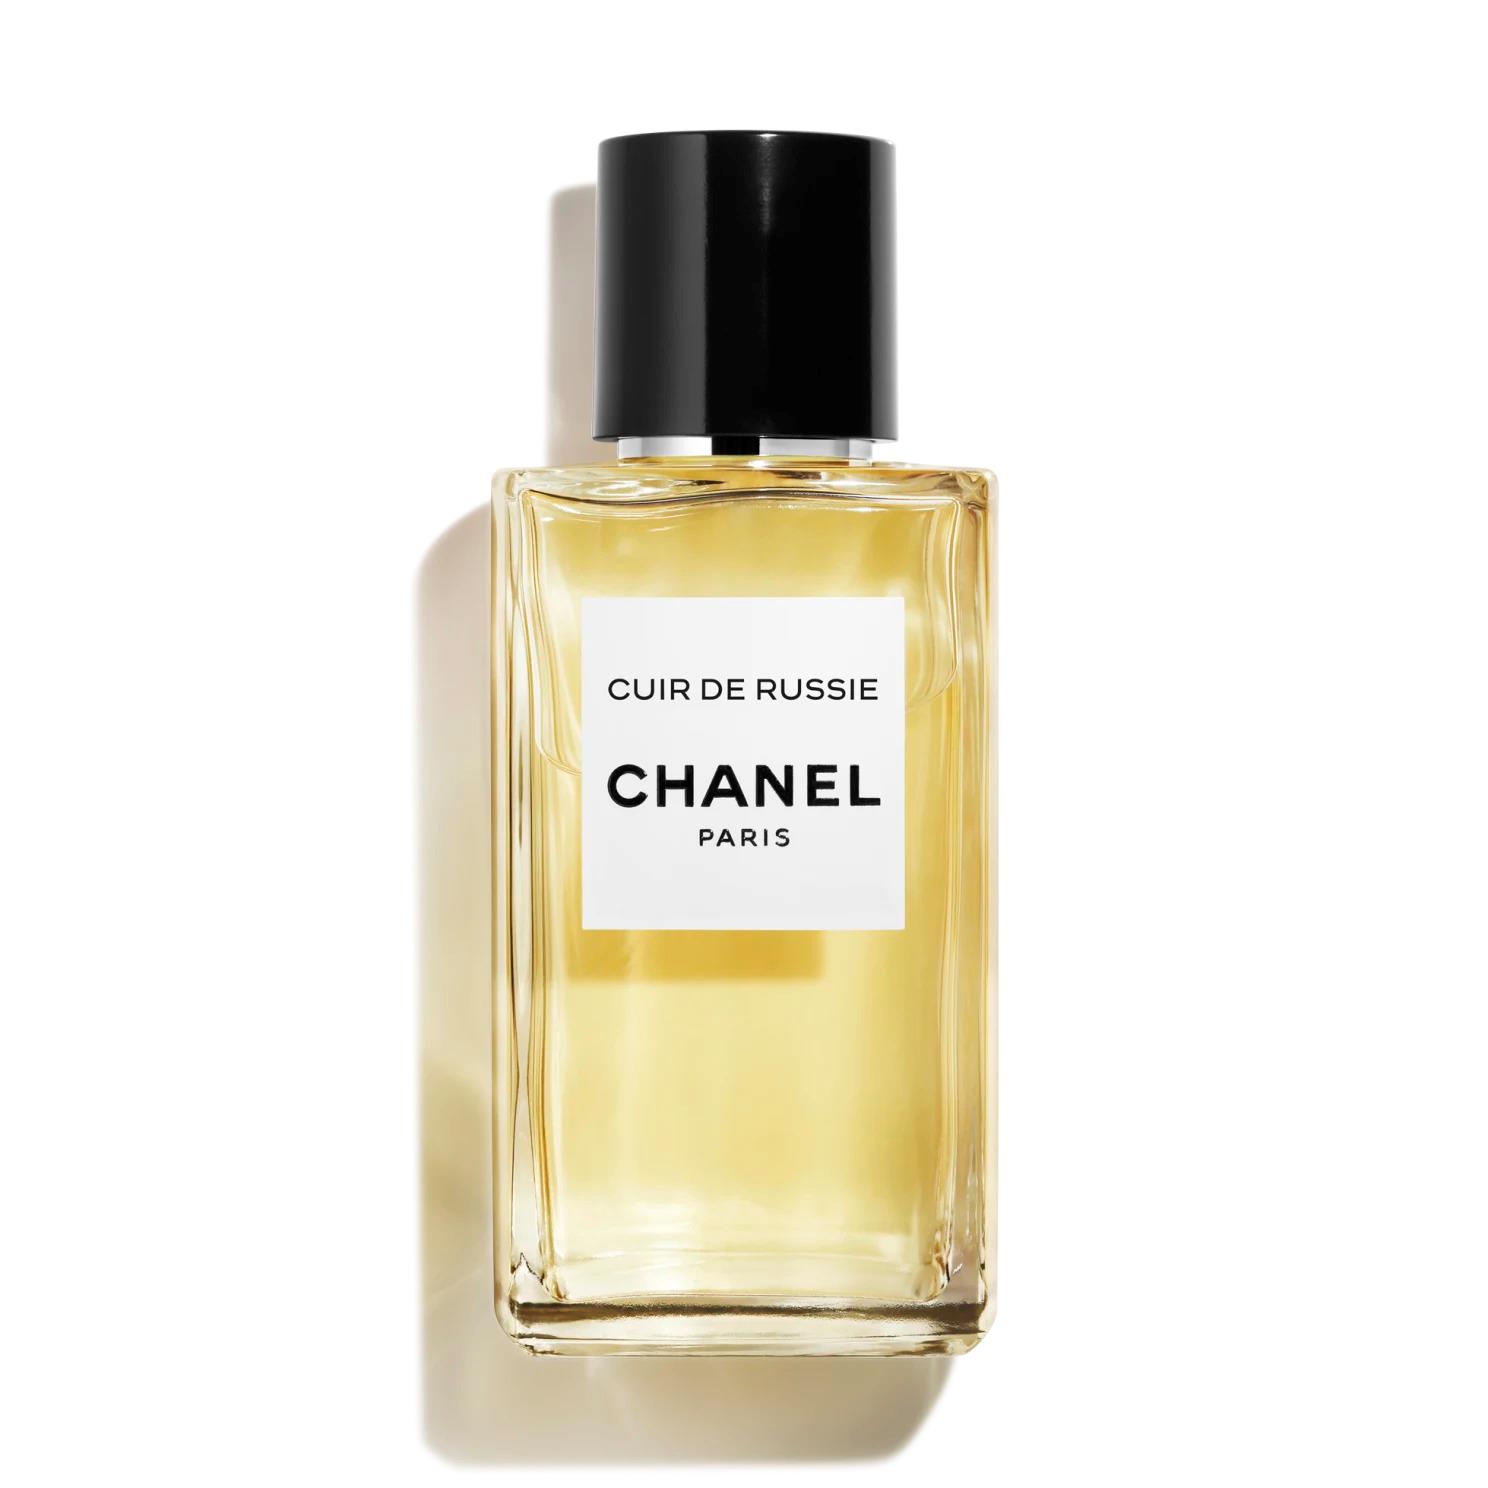  Cuir de Russie Parfum Chanel